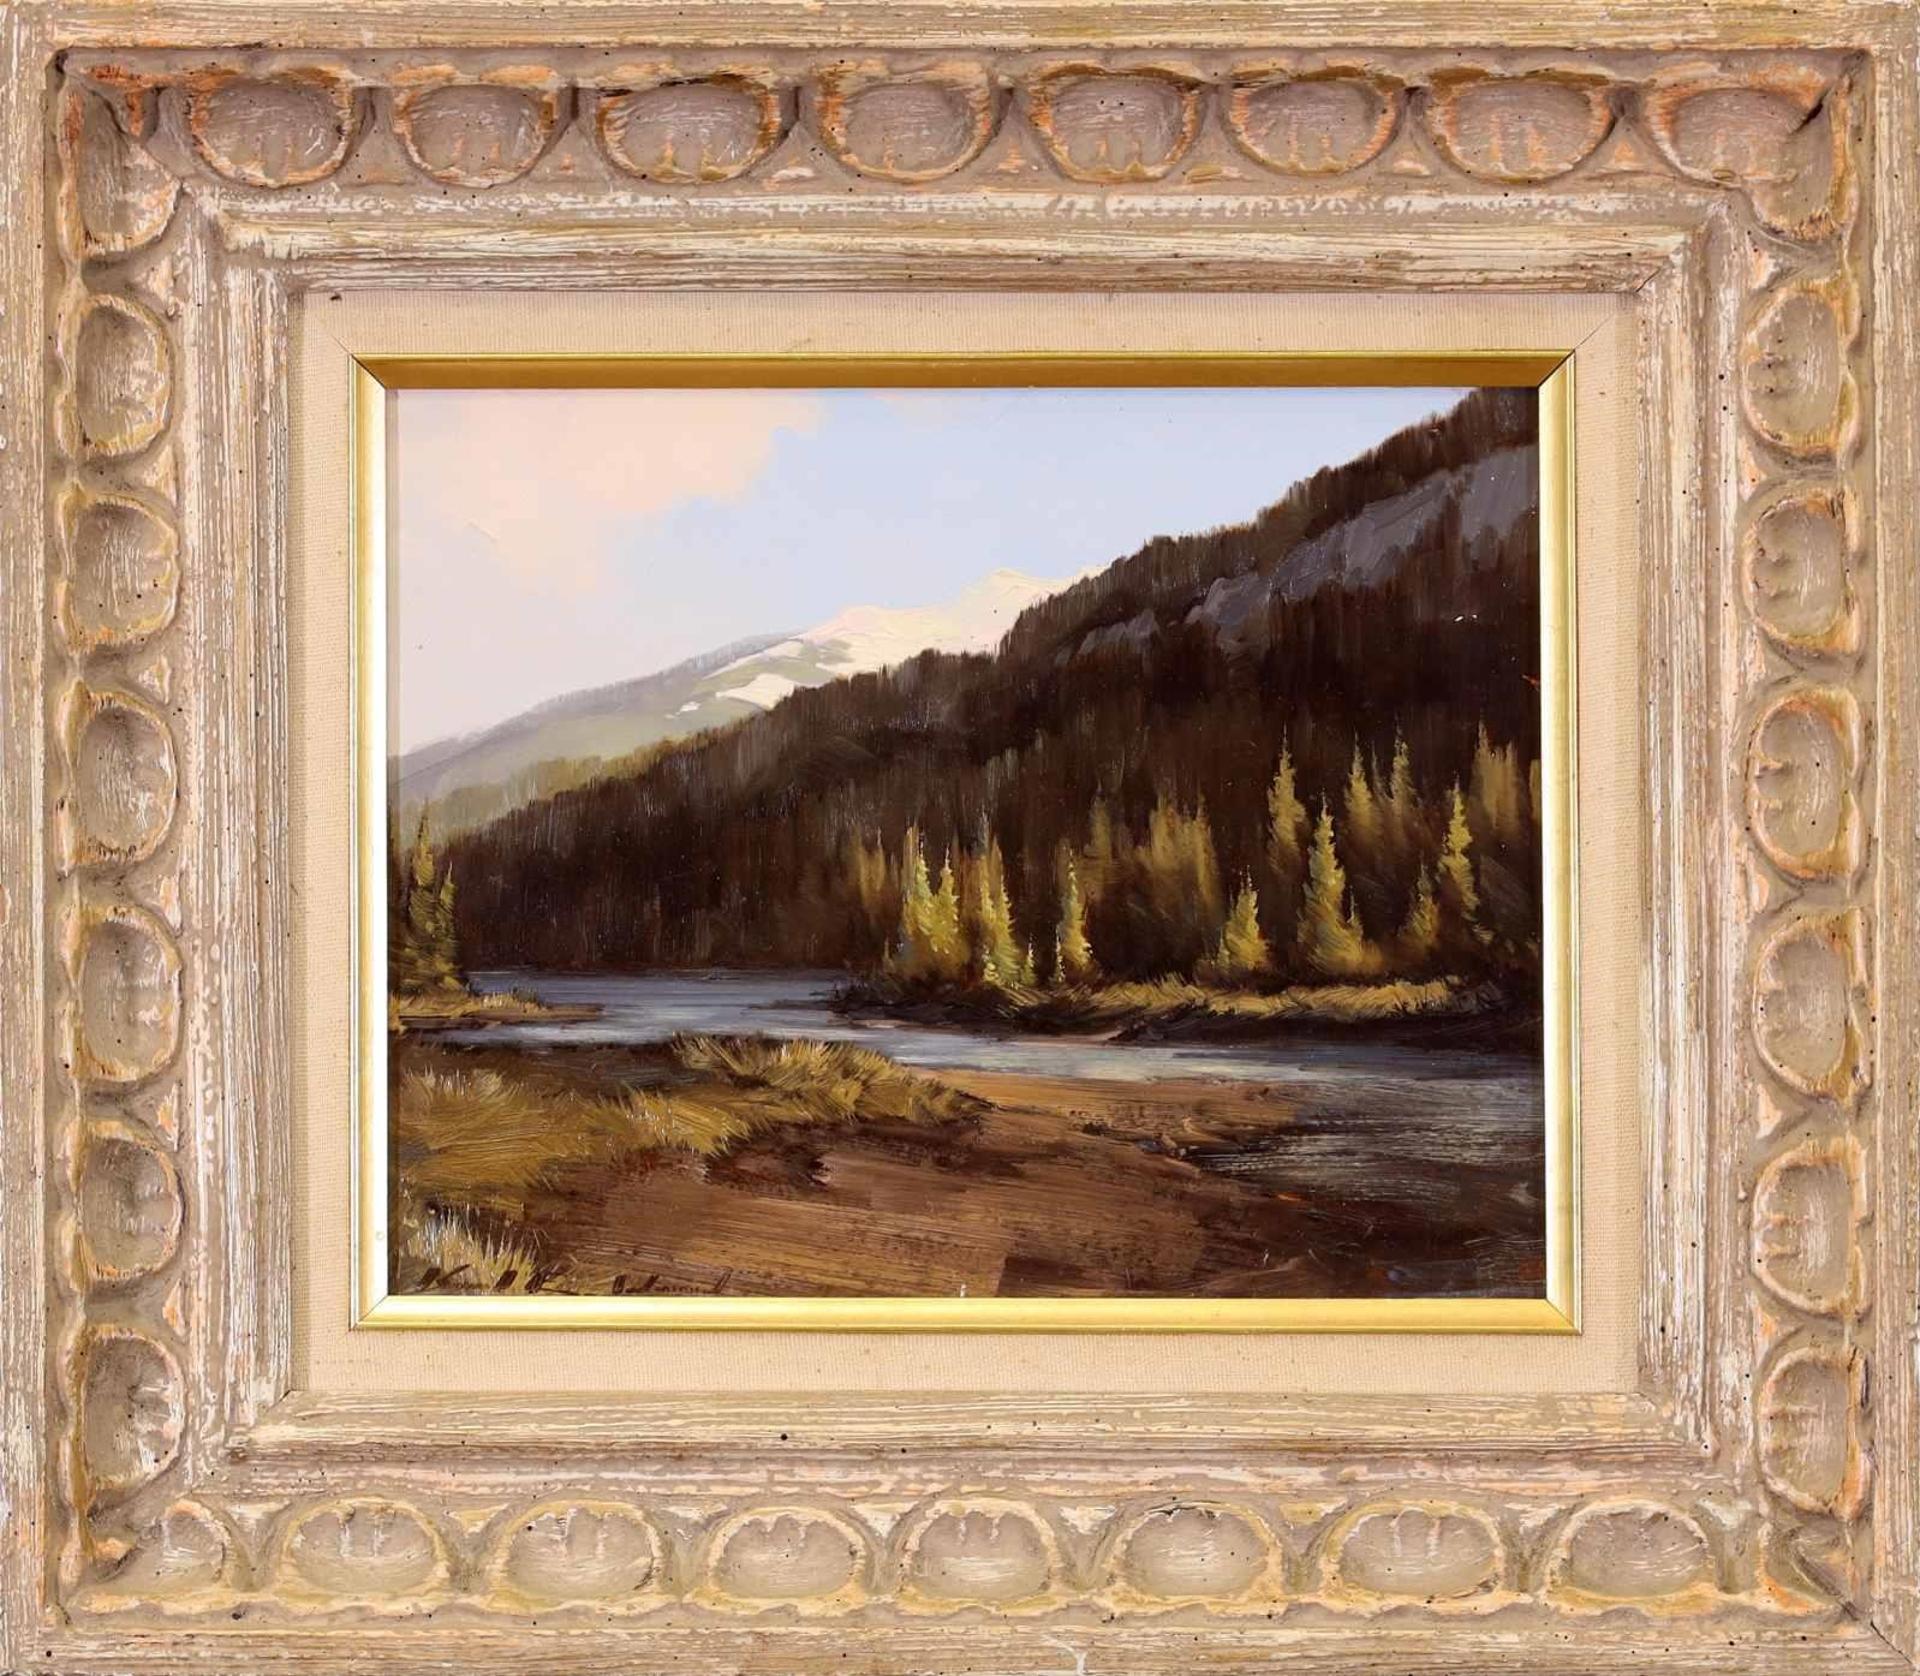 Karl E. Wood (1944-1990) - Sunwapta River, Jasper Natl. Park